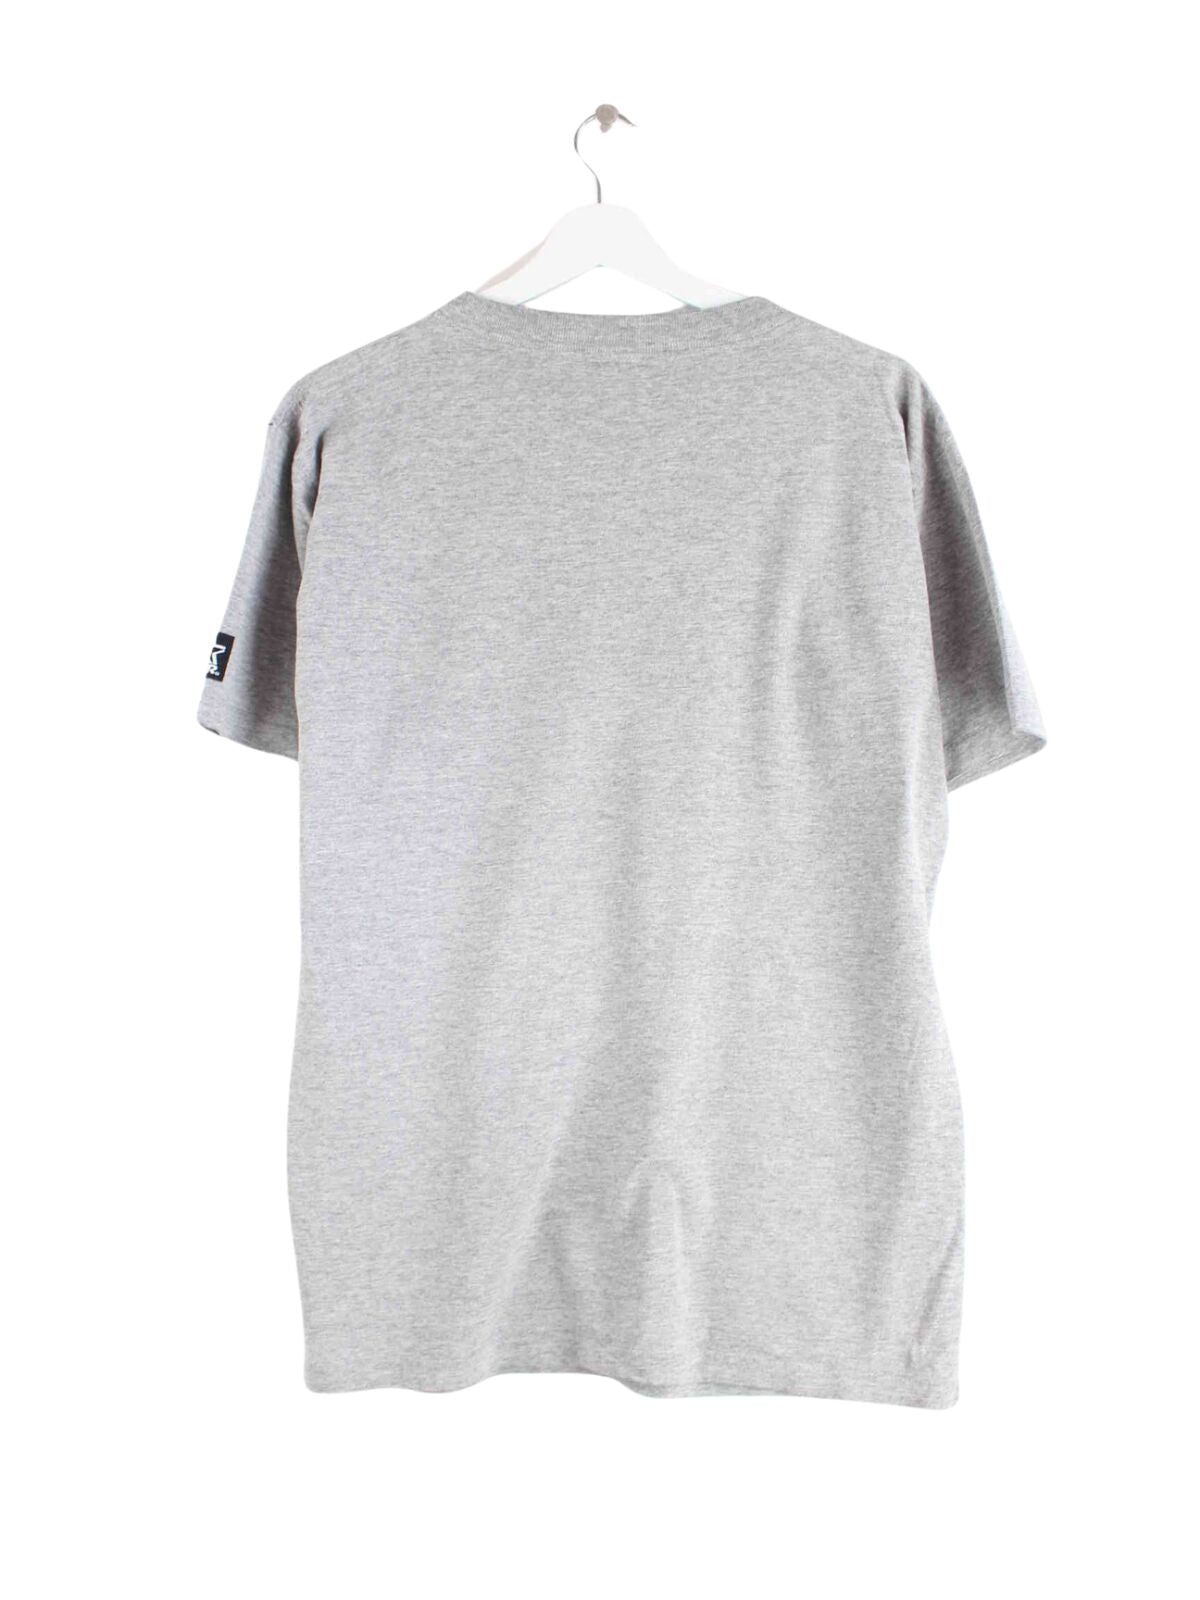 Starter 90s Vintage G-Packers Print Single Stitched T-Shirt Grau M (back image)